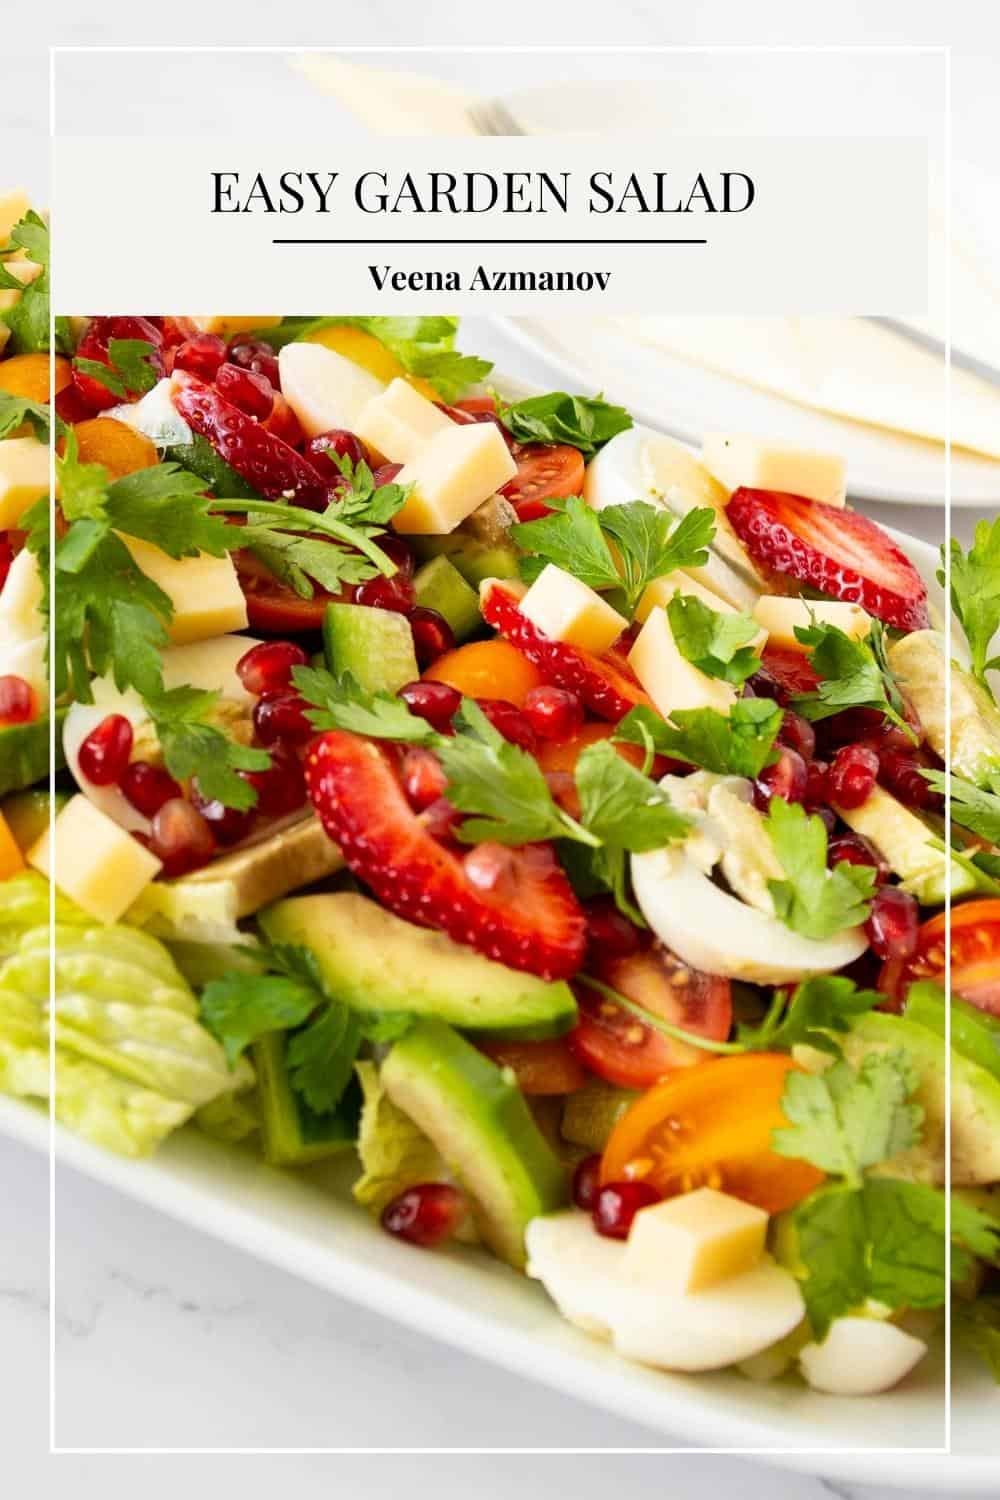 Pinterest image for salad with garden veggies.